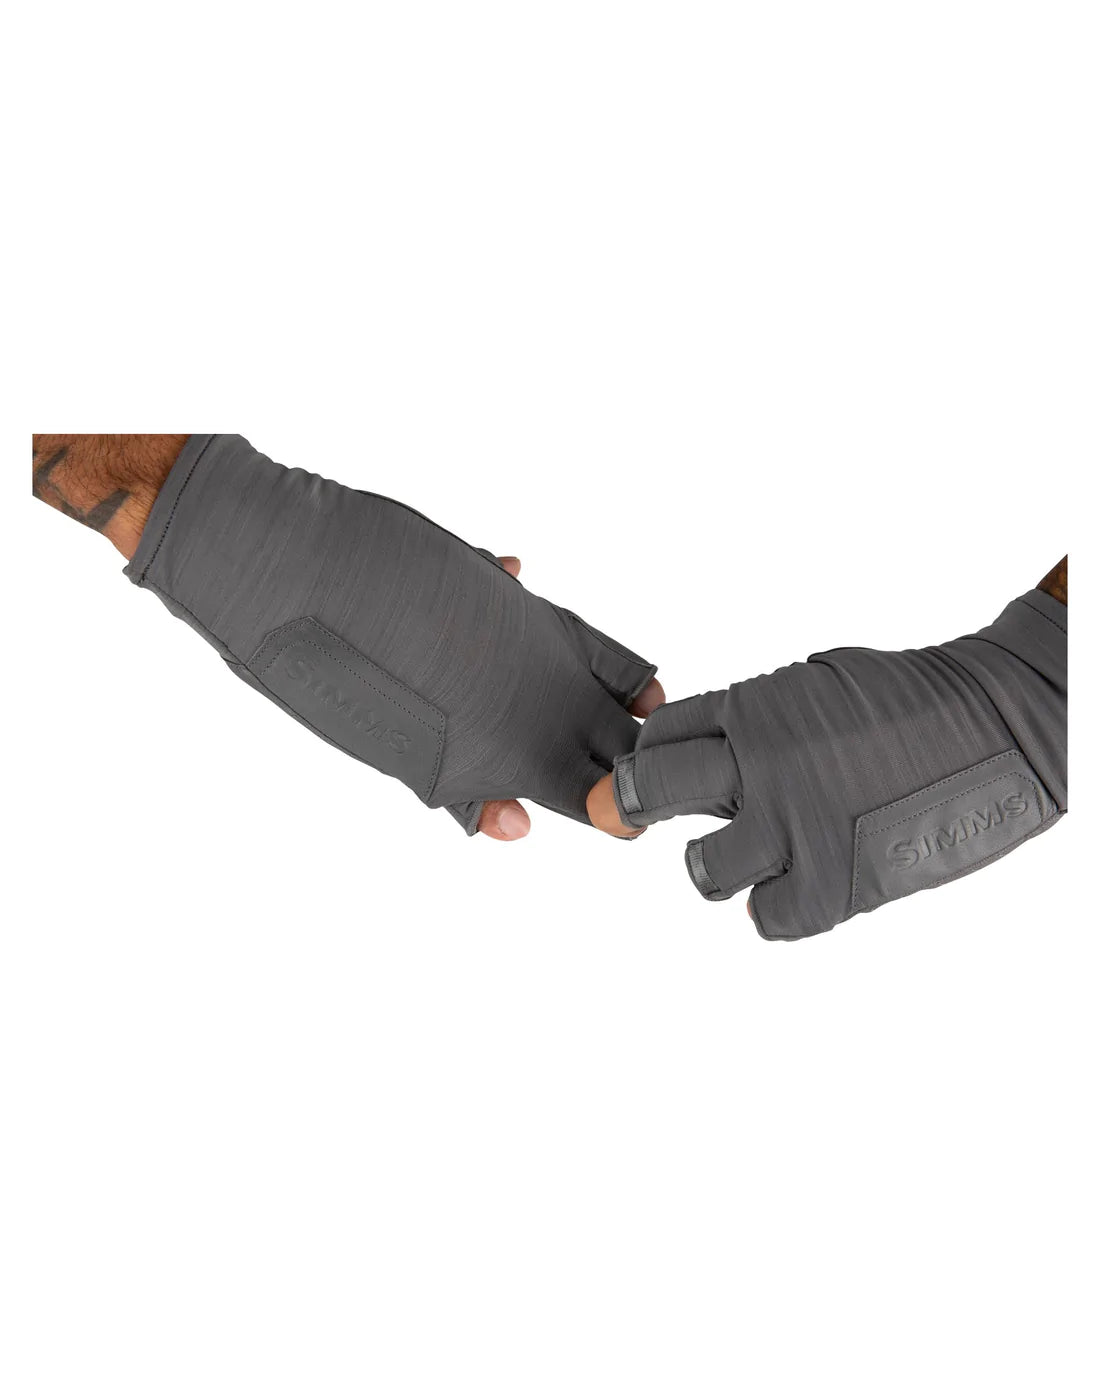 Simms Solarflex Guide Glove - Sterling - XL